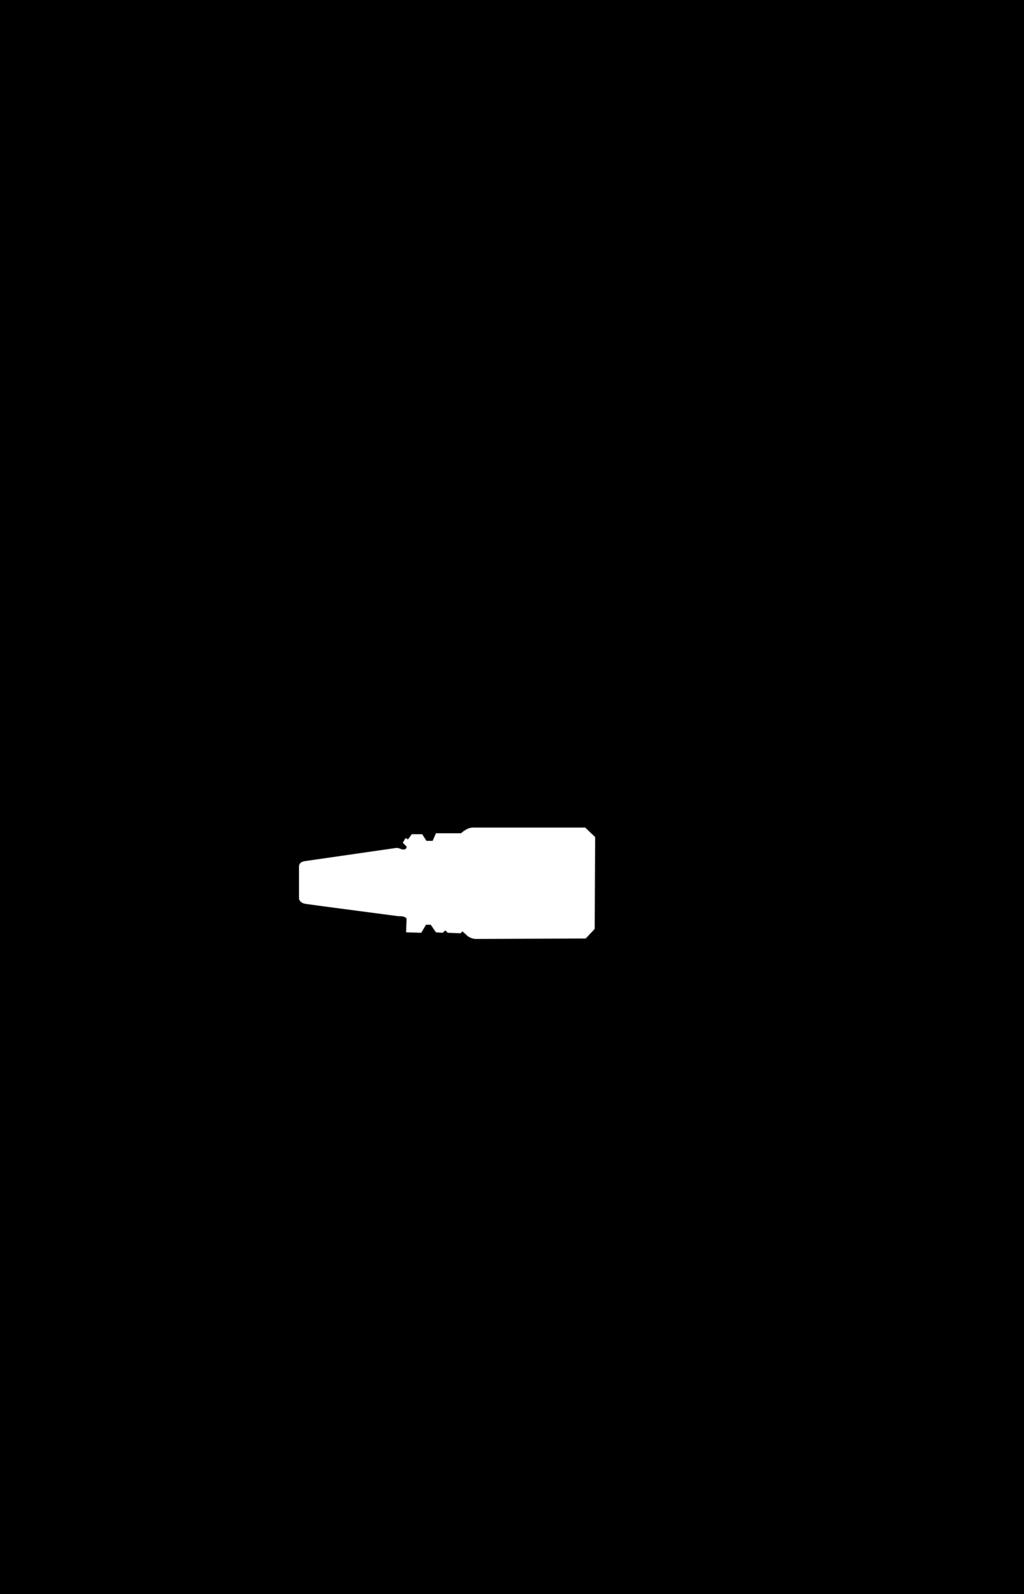 000 Min. ødc -0.3 Max. ødc +1.3 Drill shank Contact area Drill chuck has two circular sections.